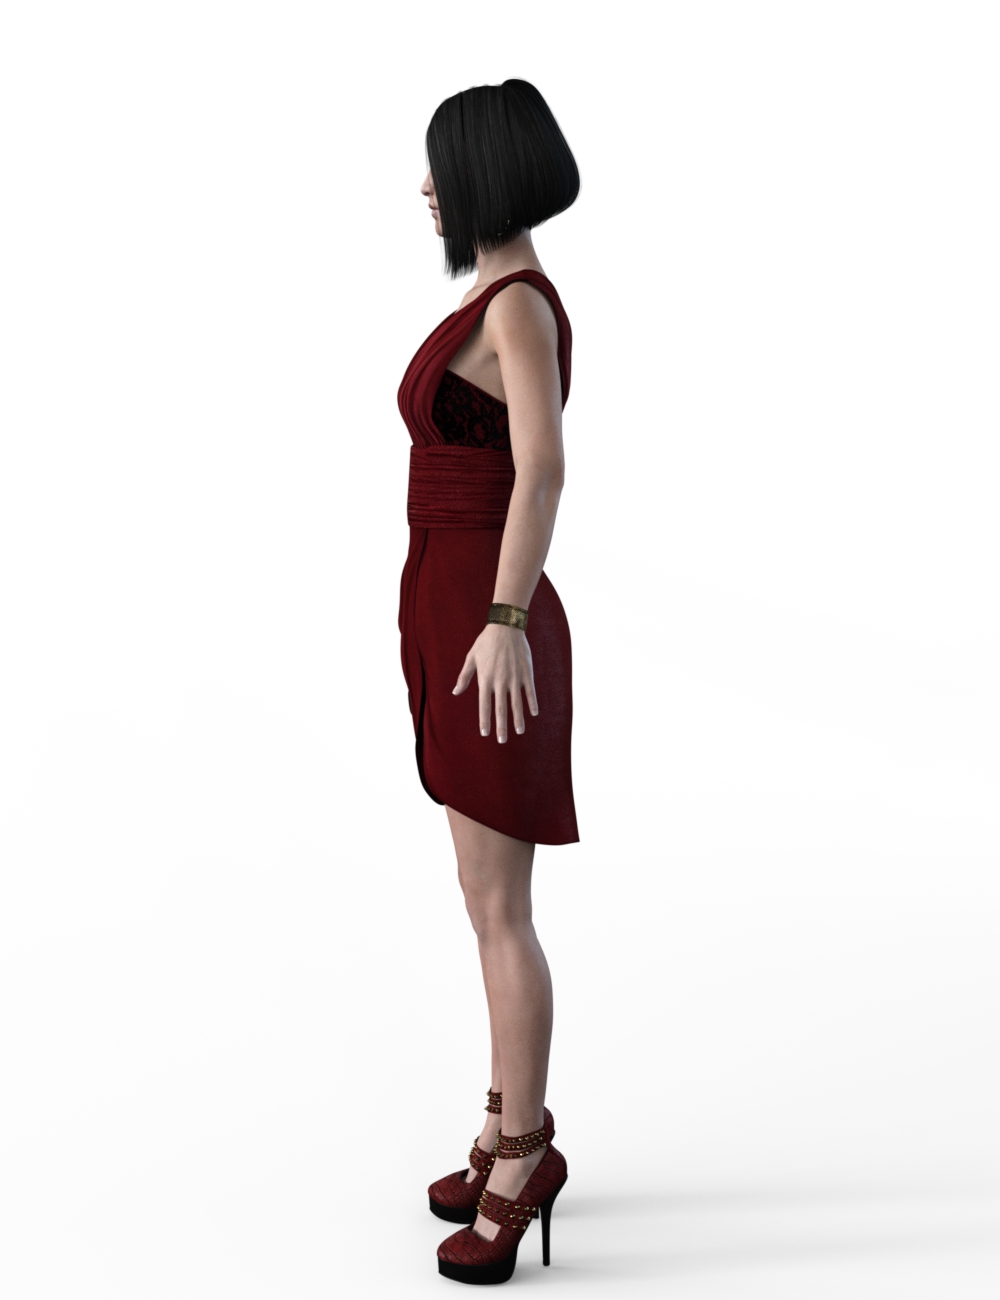 FBX- Mei Lin Fifth Avenue Outfit by: Paleo, 3D Models by Daz 3D